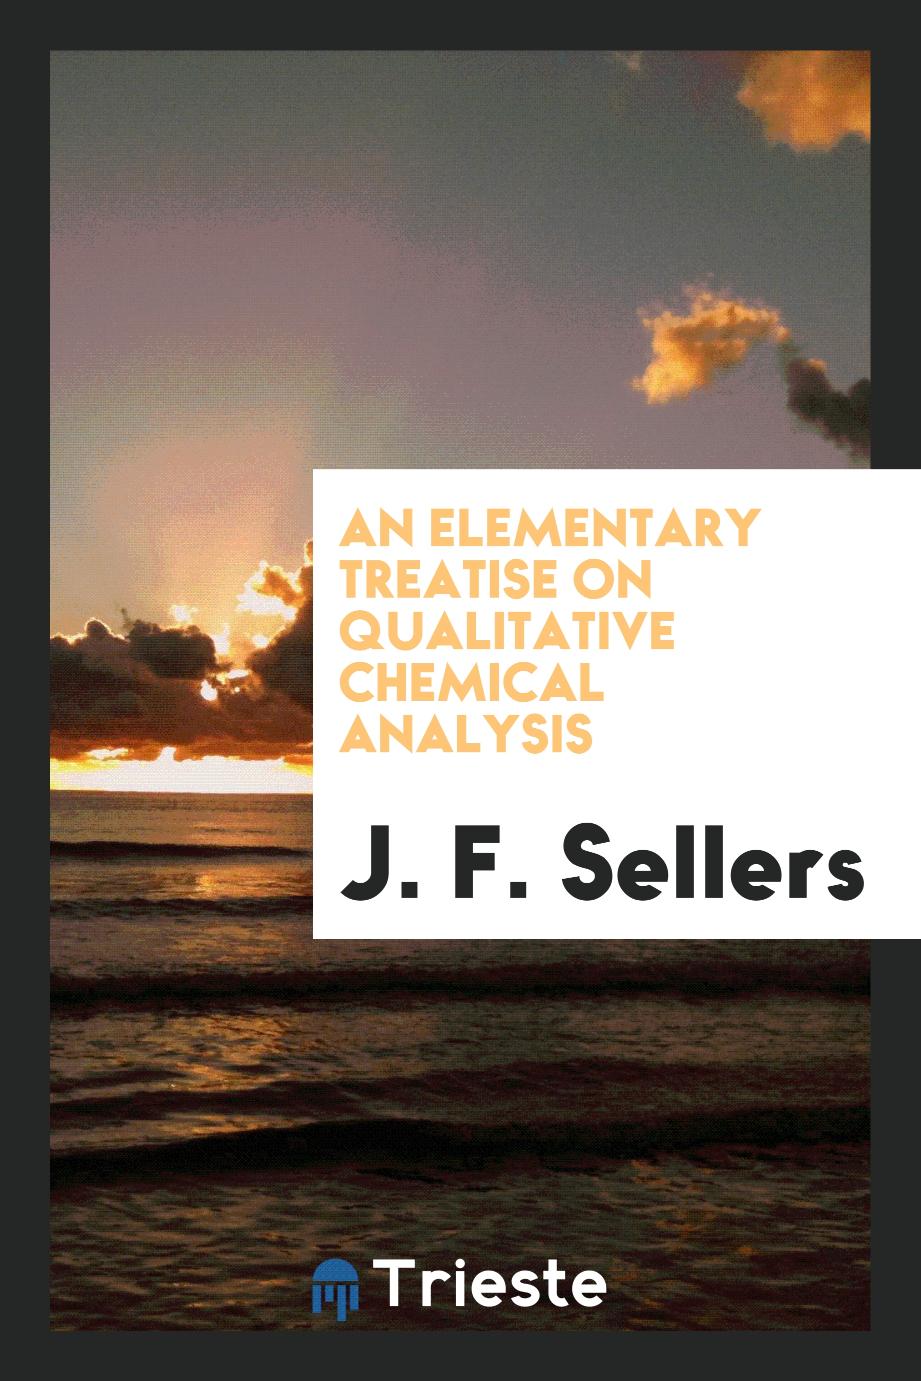 An elementary treatise on qualitative chemical analysis